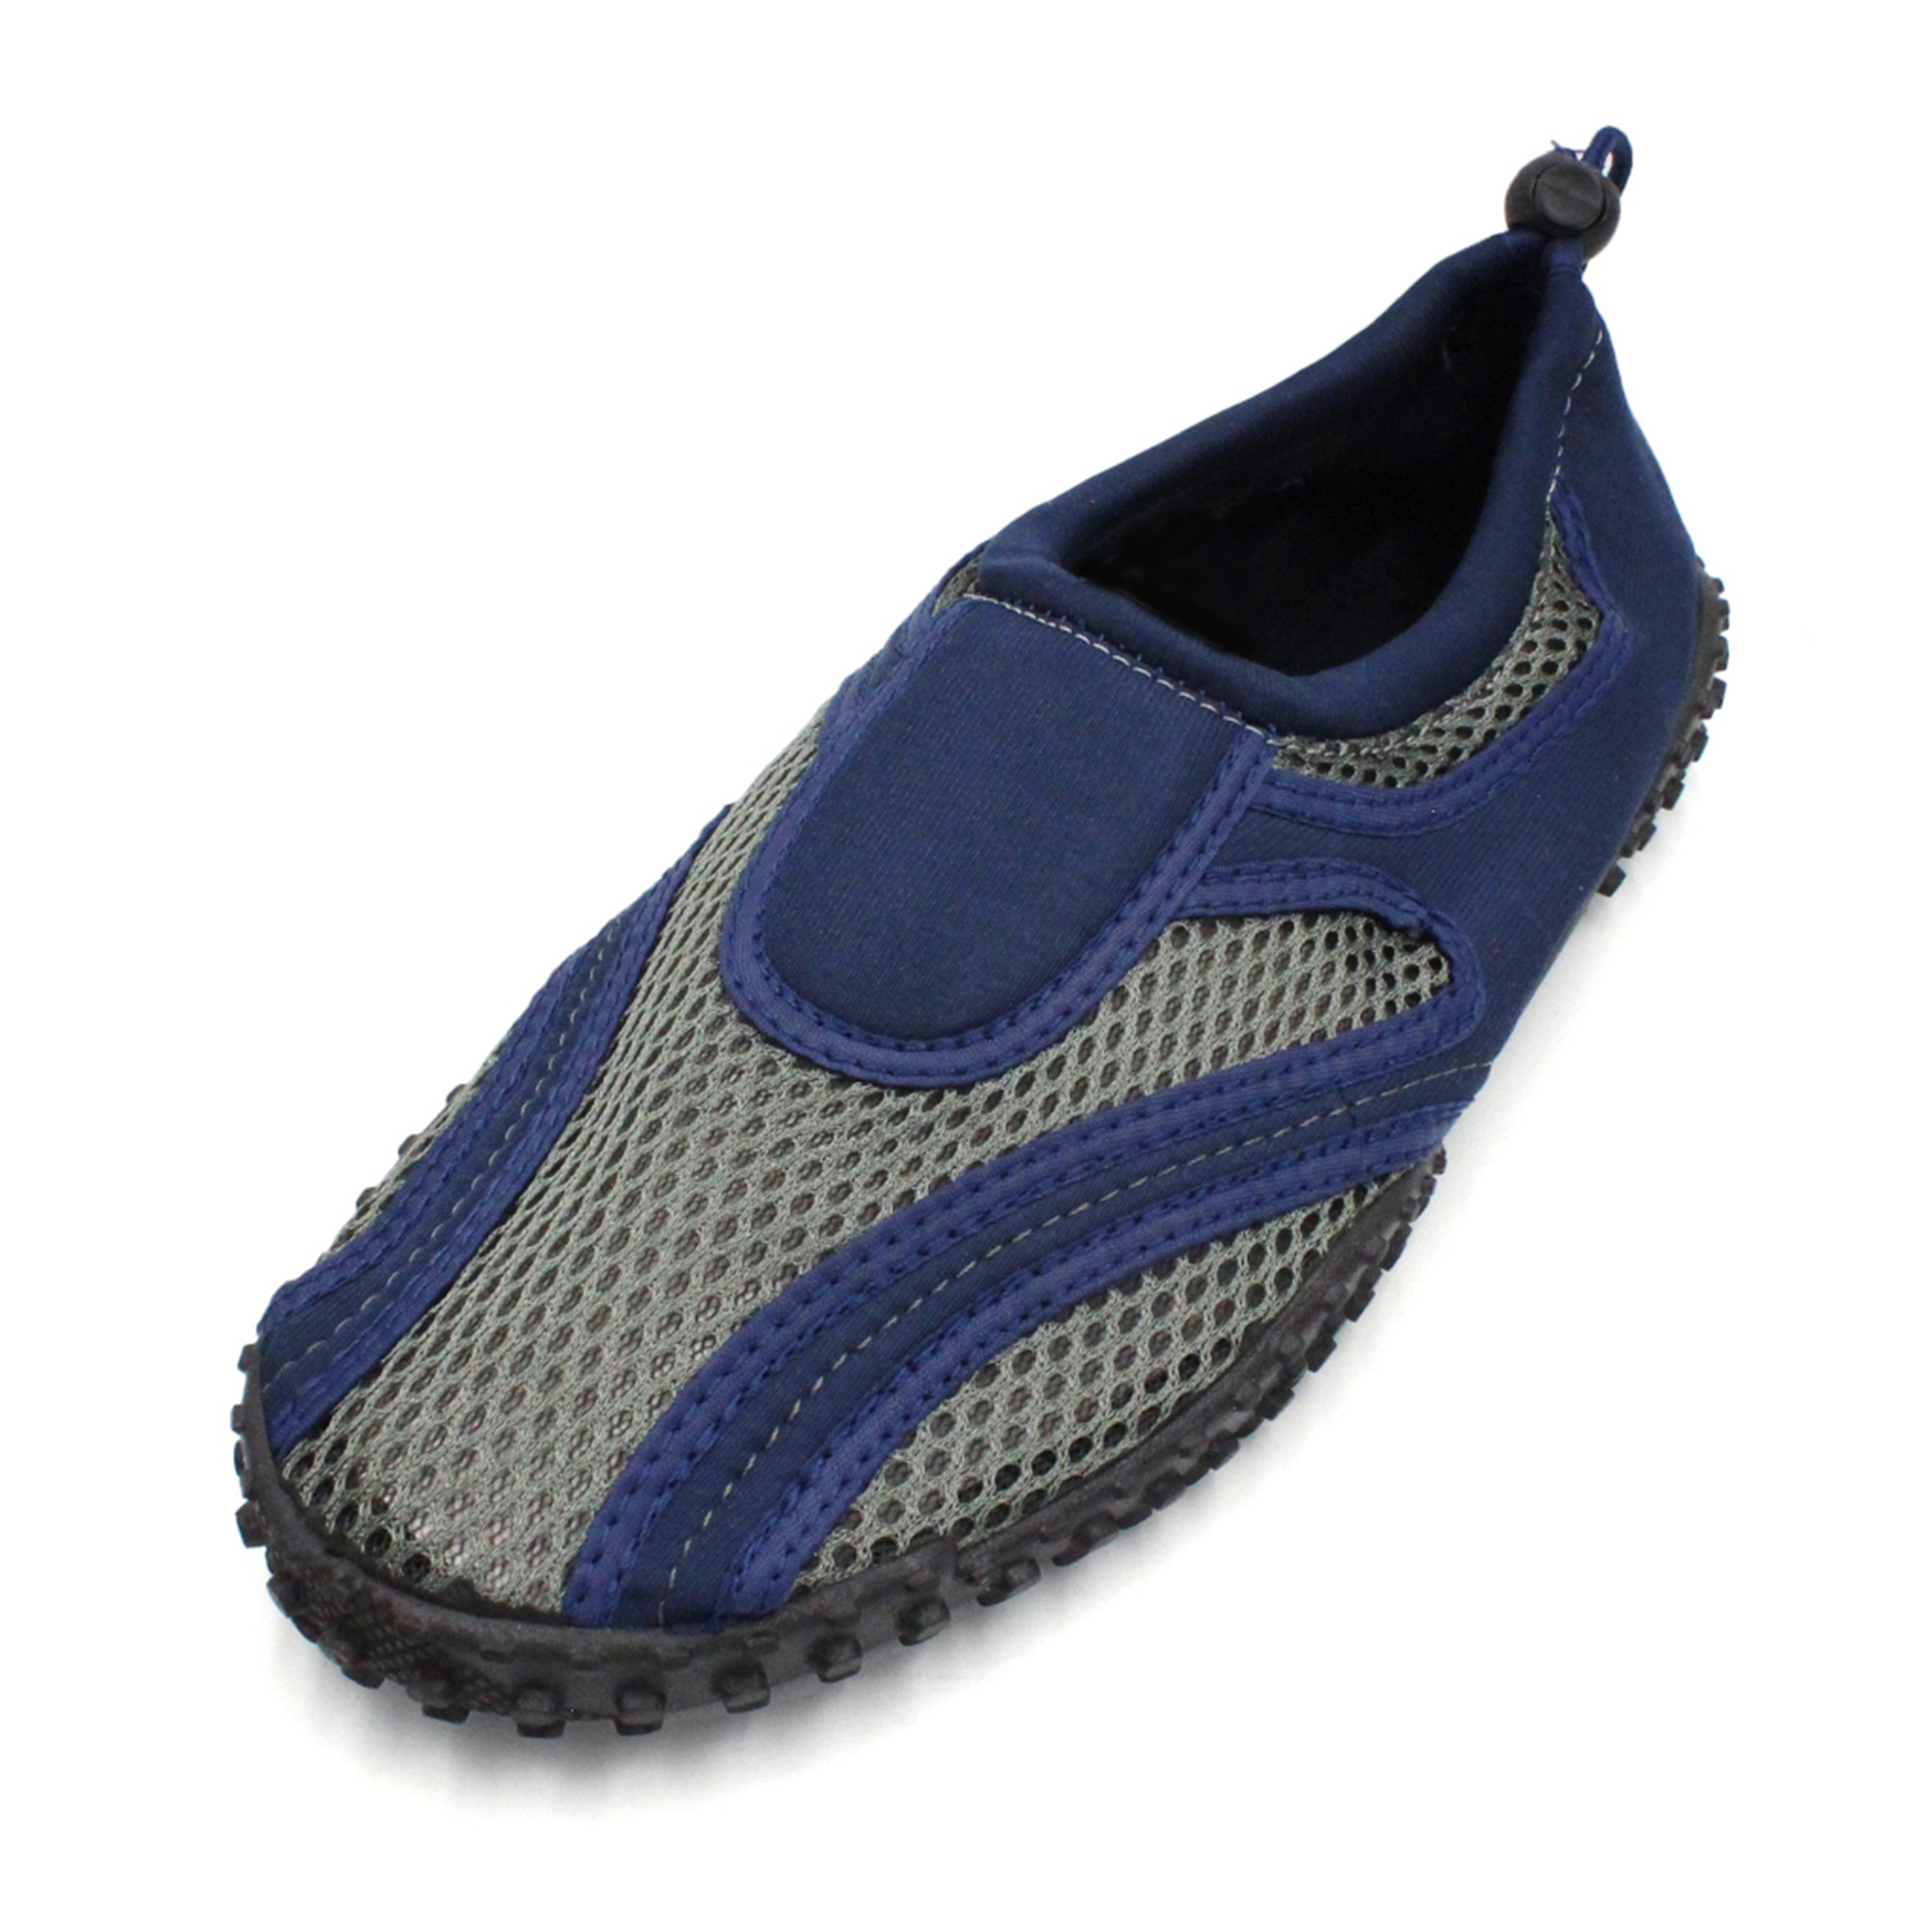 Ventana Men's Water Shoes Beach Aqua Sock Quick Dry Pool Slip On Sandals - image 2 of 5